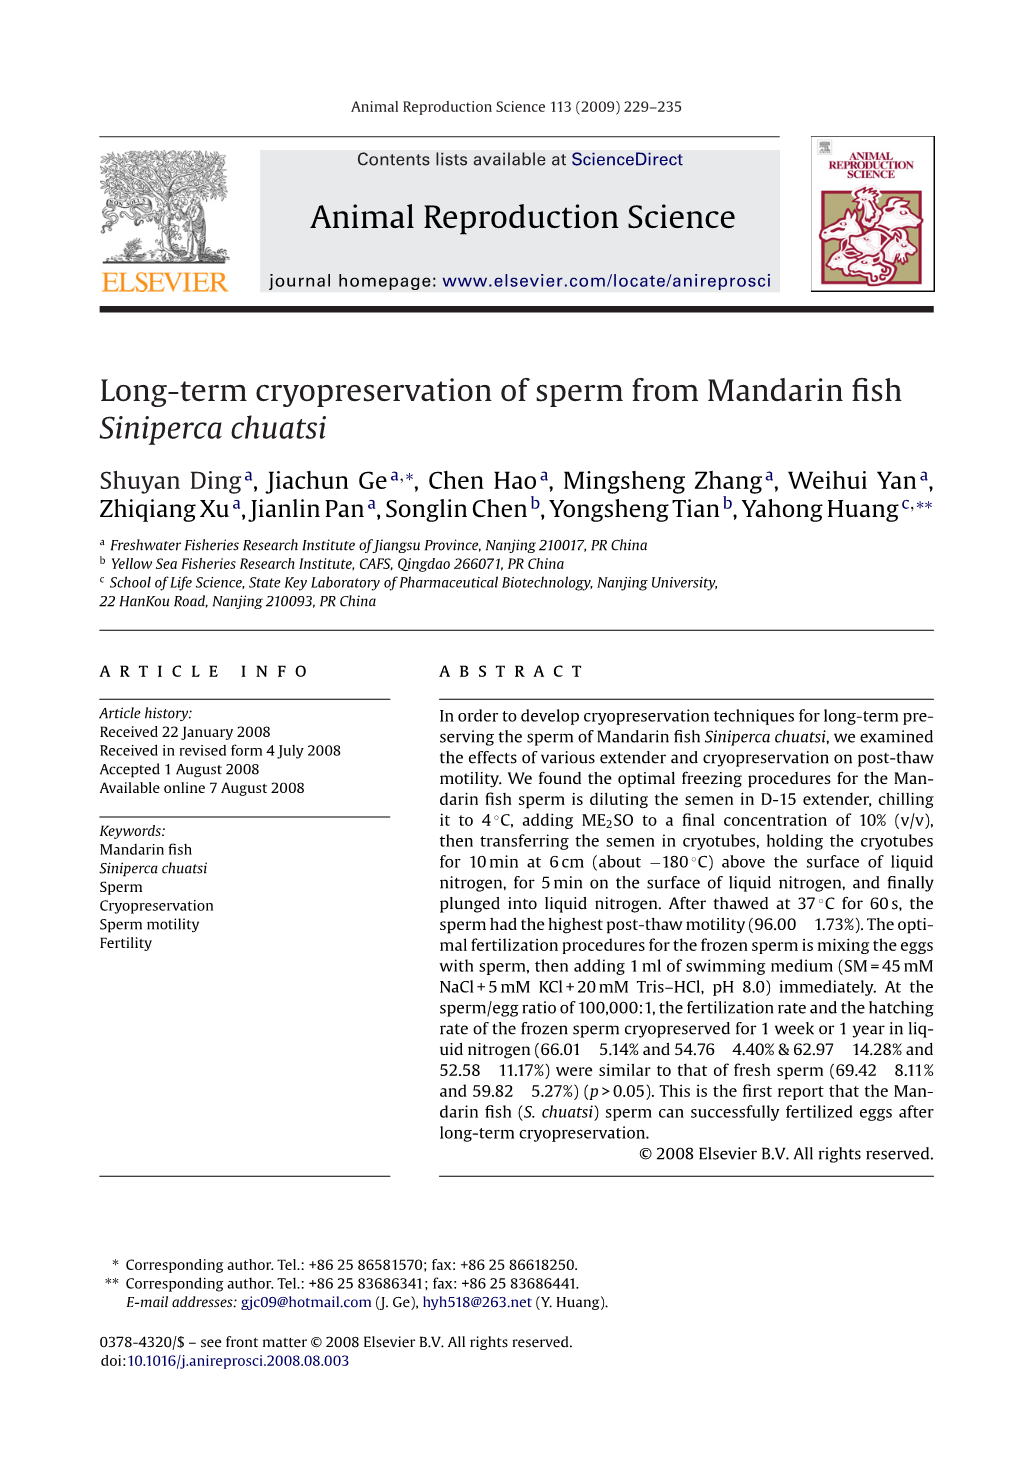 Animal Reproduction Science Long-Term Cryopreservation of Sperm from Mandarin Fish Siniperca Chuatsi